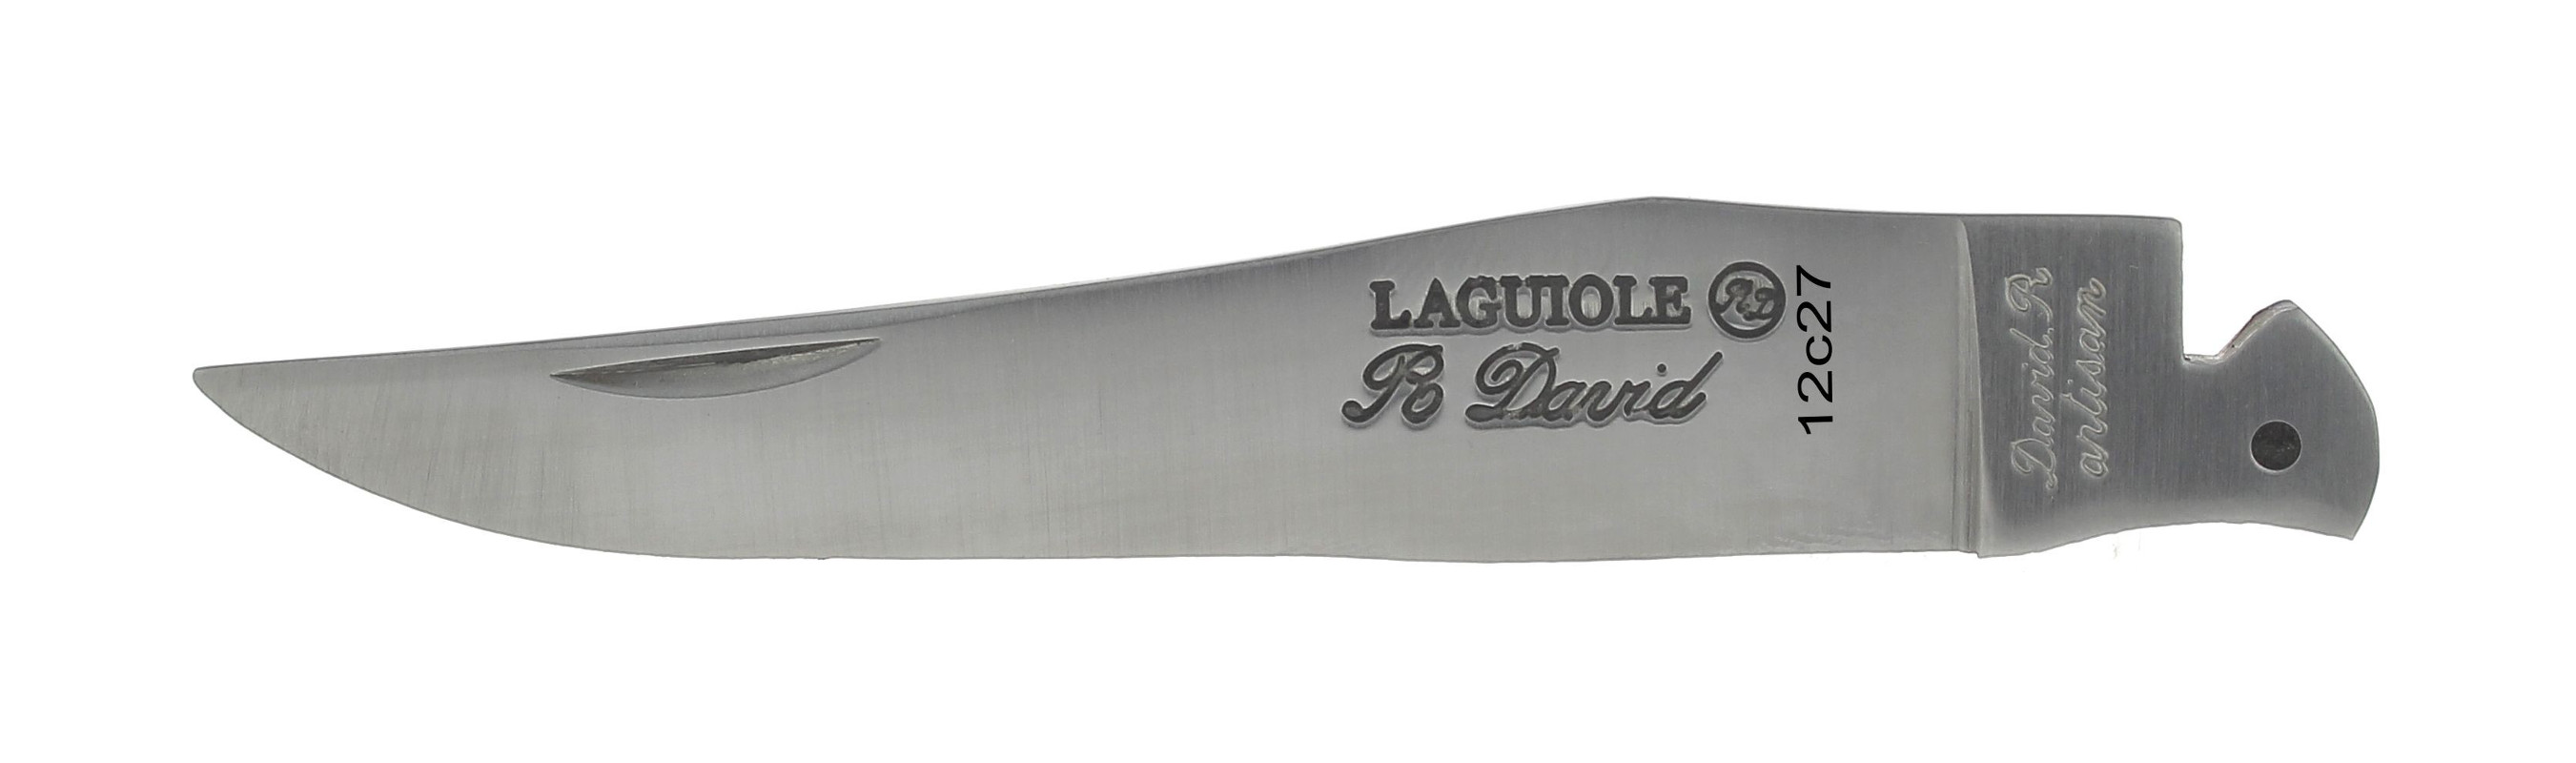 Sandvik 12C27 stainless blade Laguiole